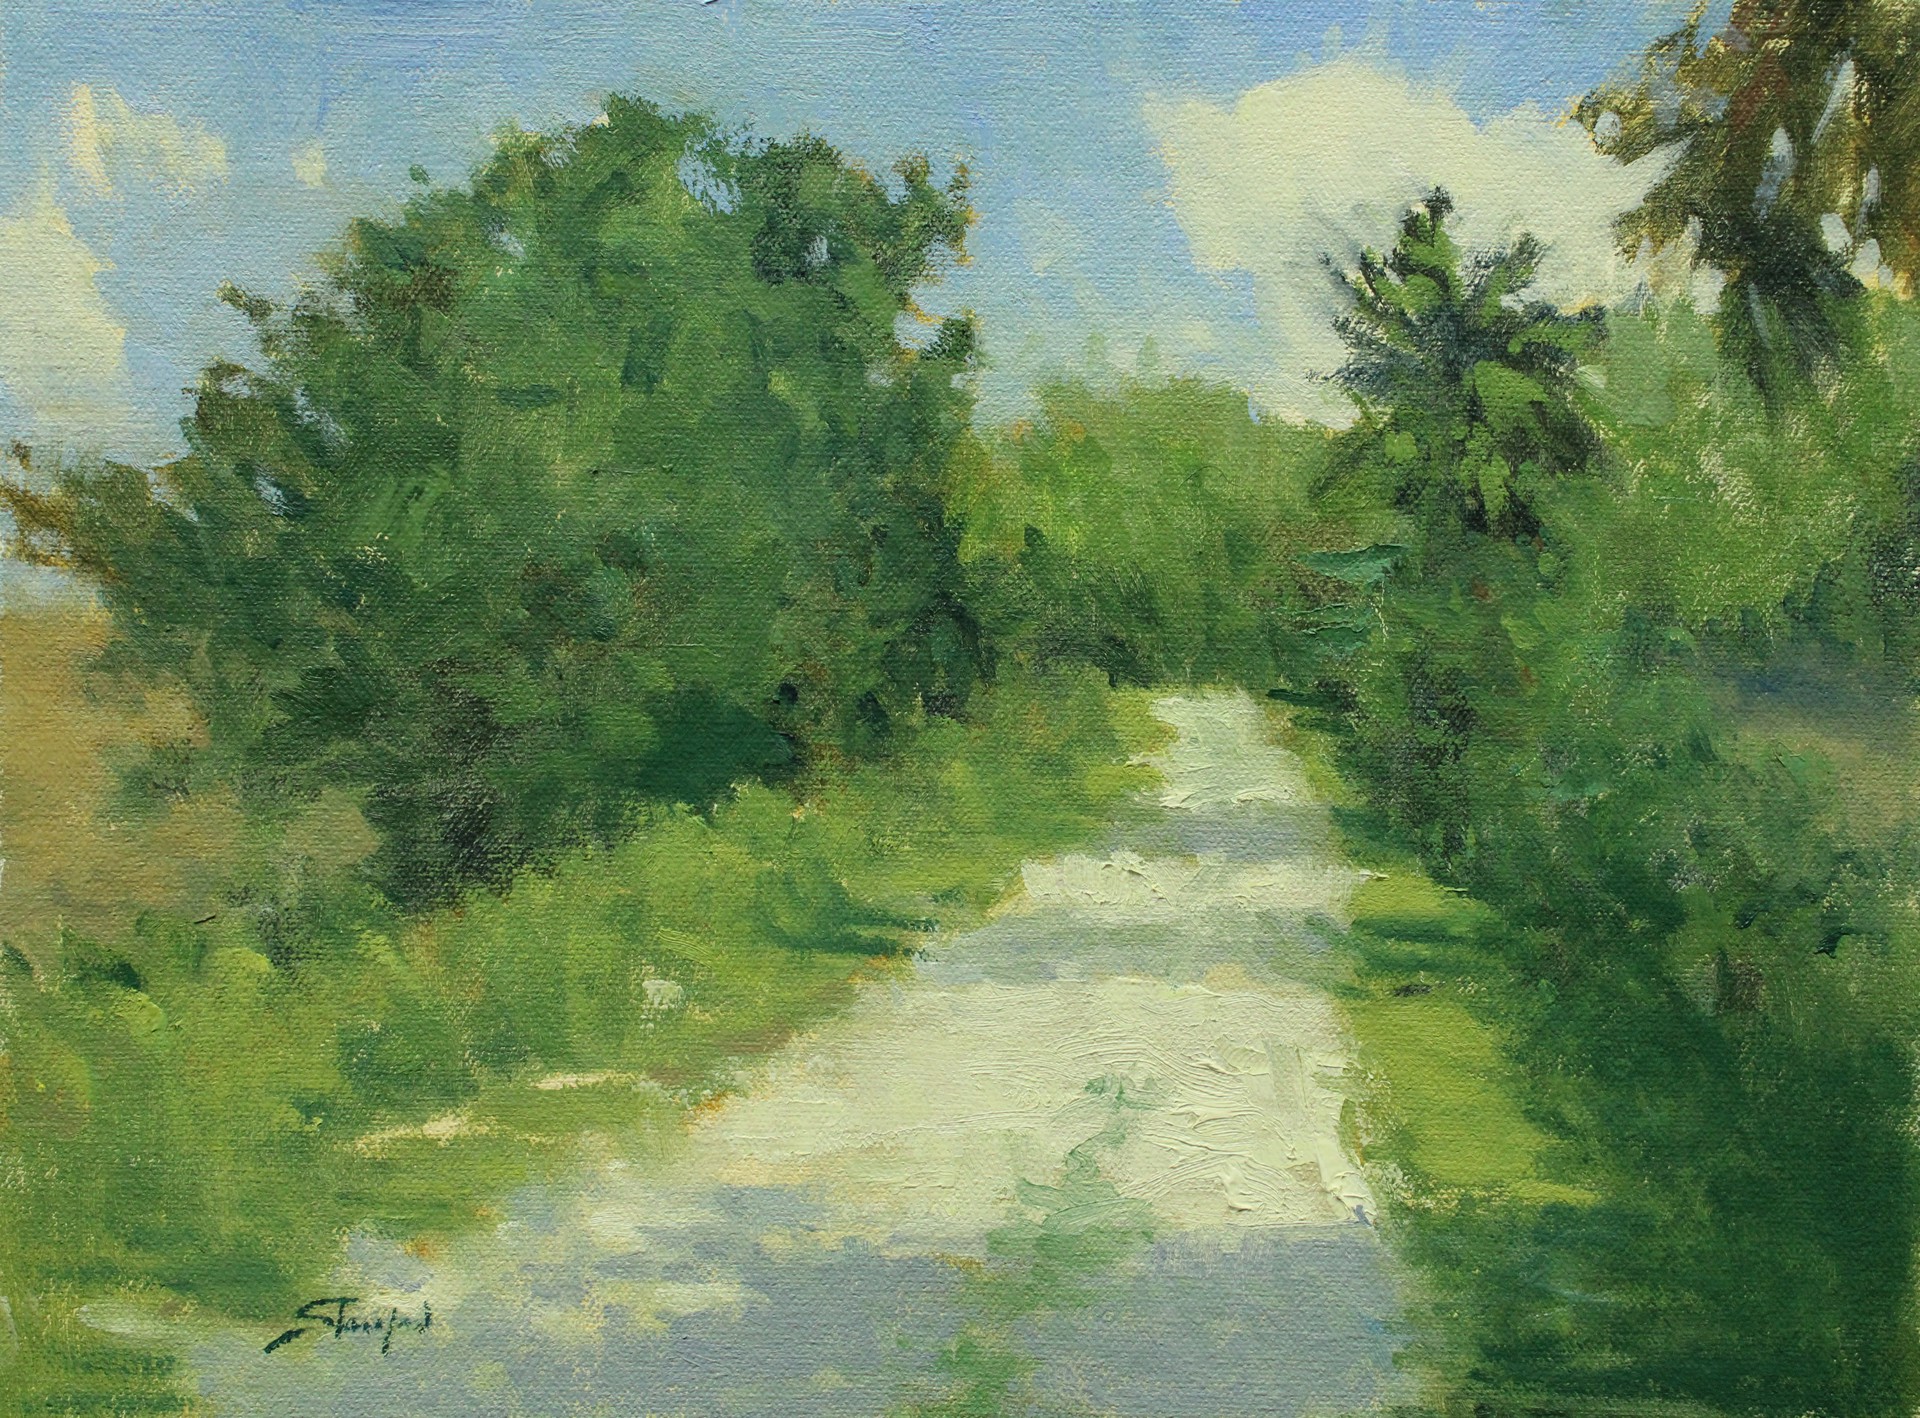 Marsh Road by John Stanford